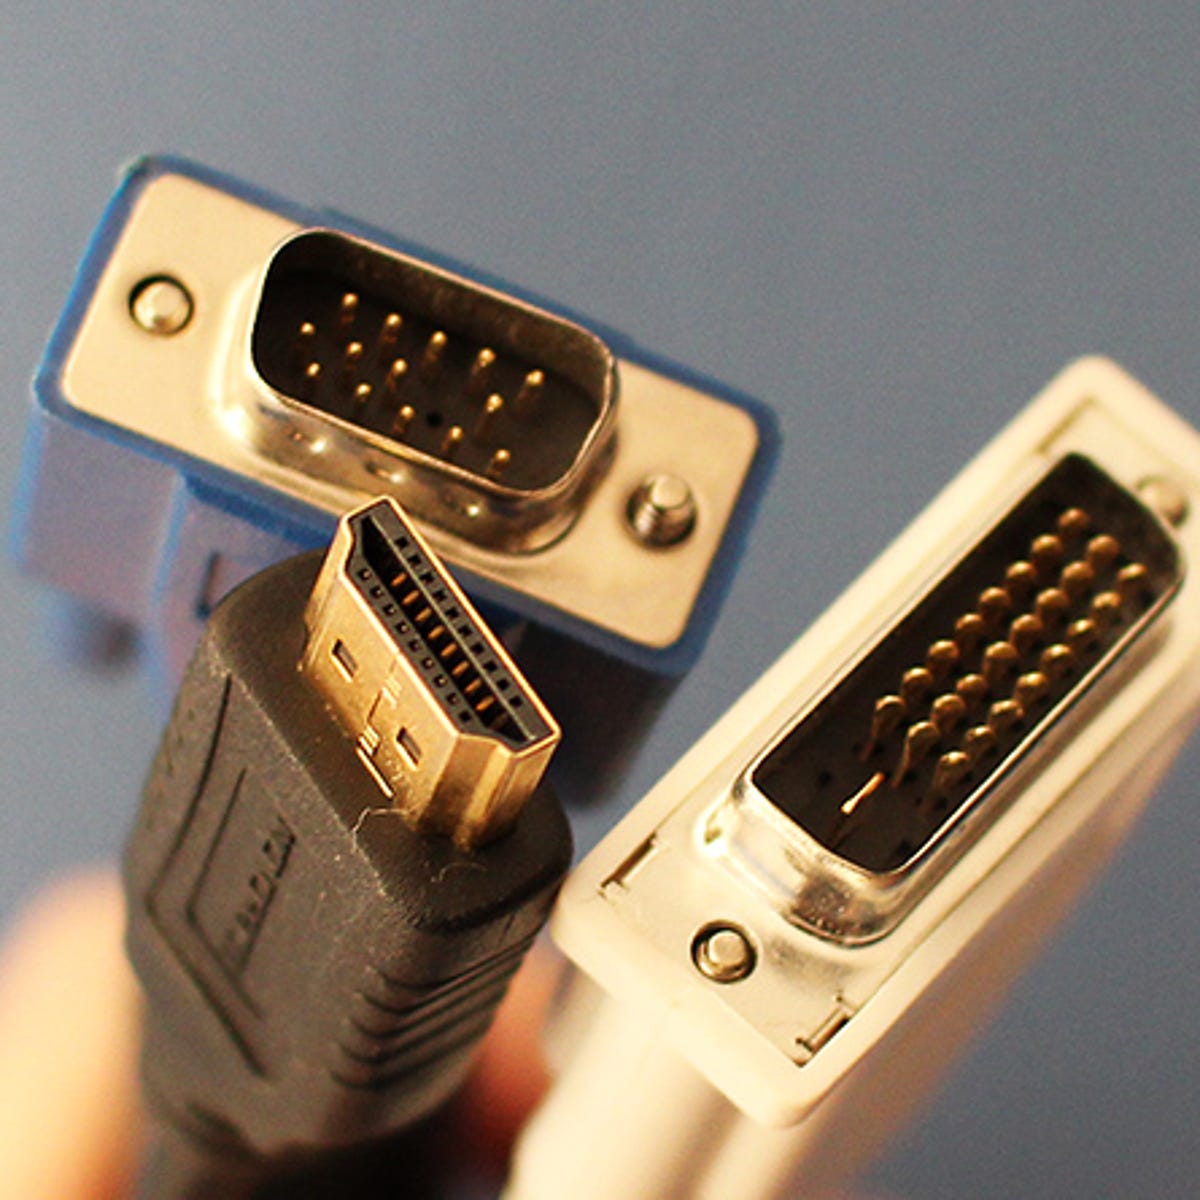 patrice frynser i morgen HDMI vs. DisplayPort vs. DVI vs. VGA: Which connection to choose? - CNET